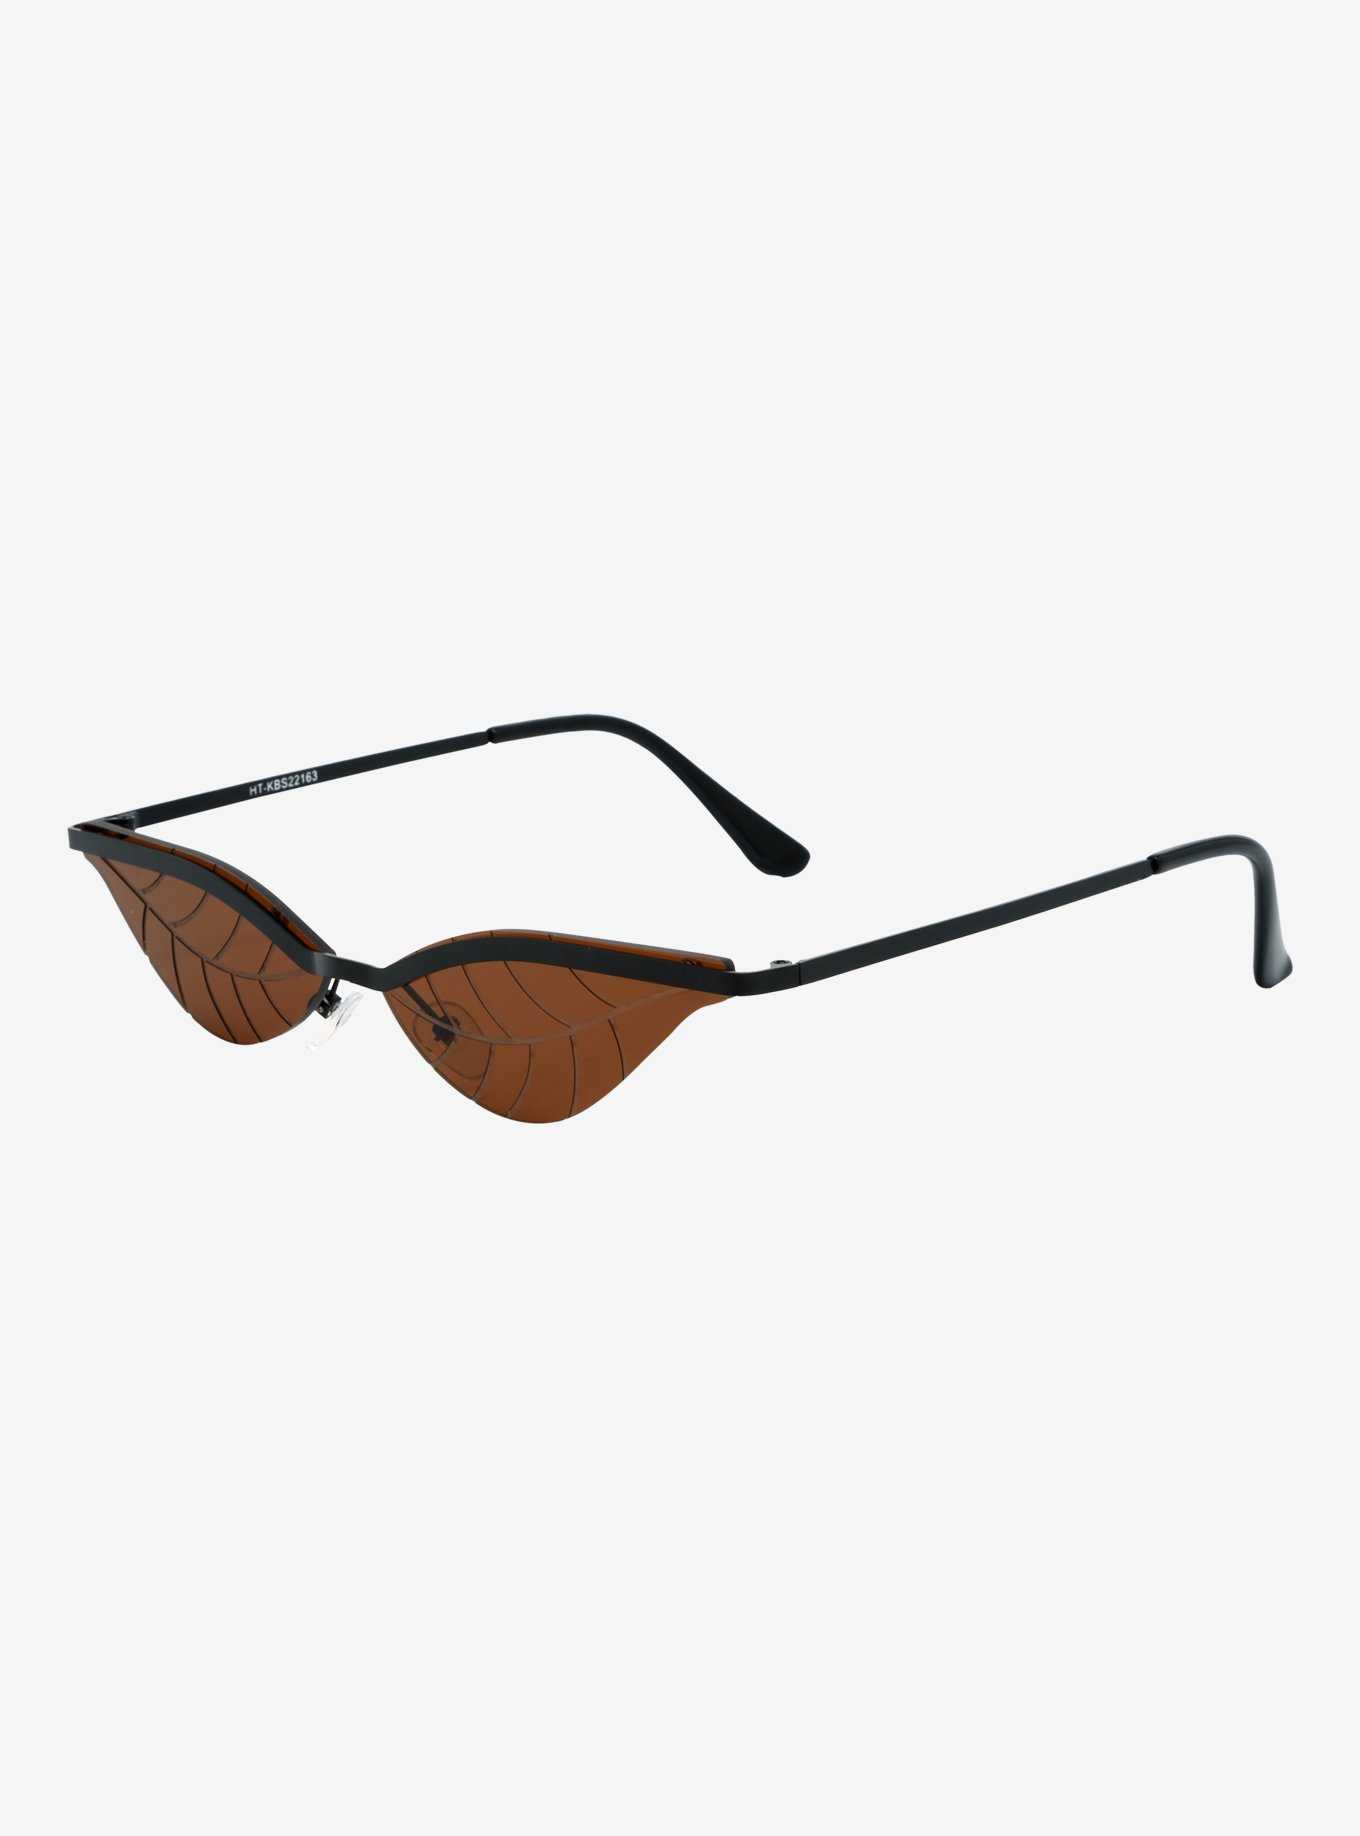 Brown Leaf Sunglasses, , hi-res